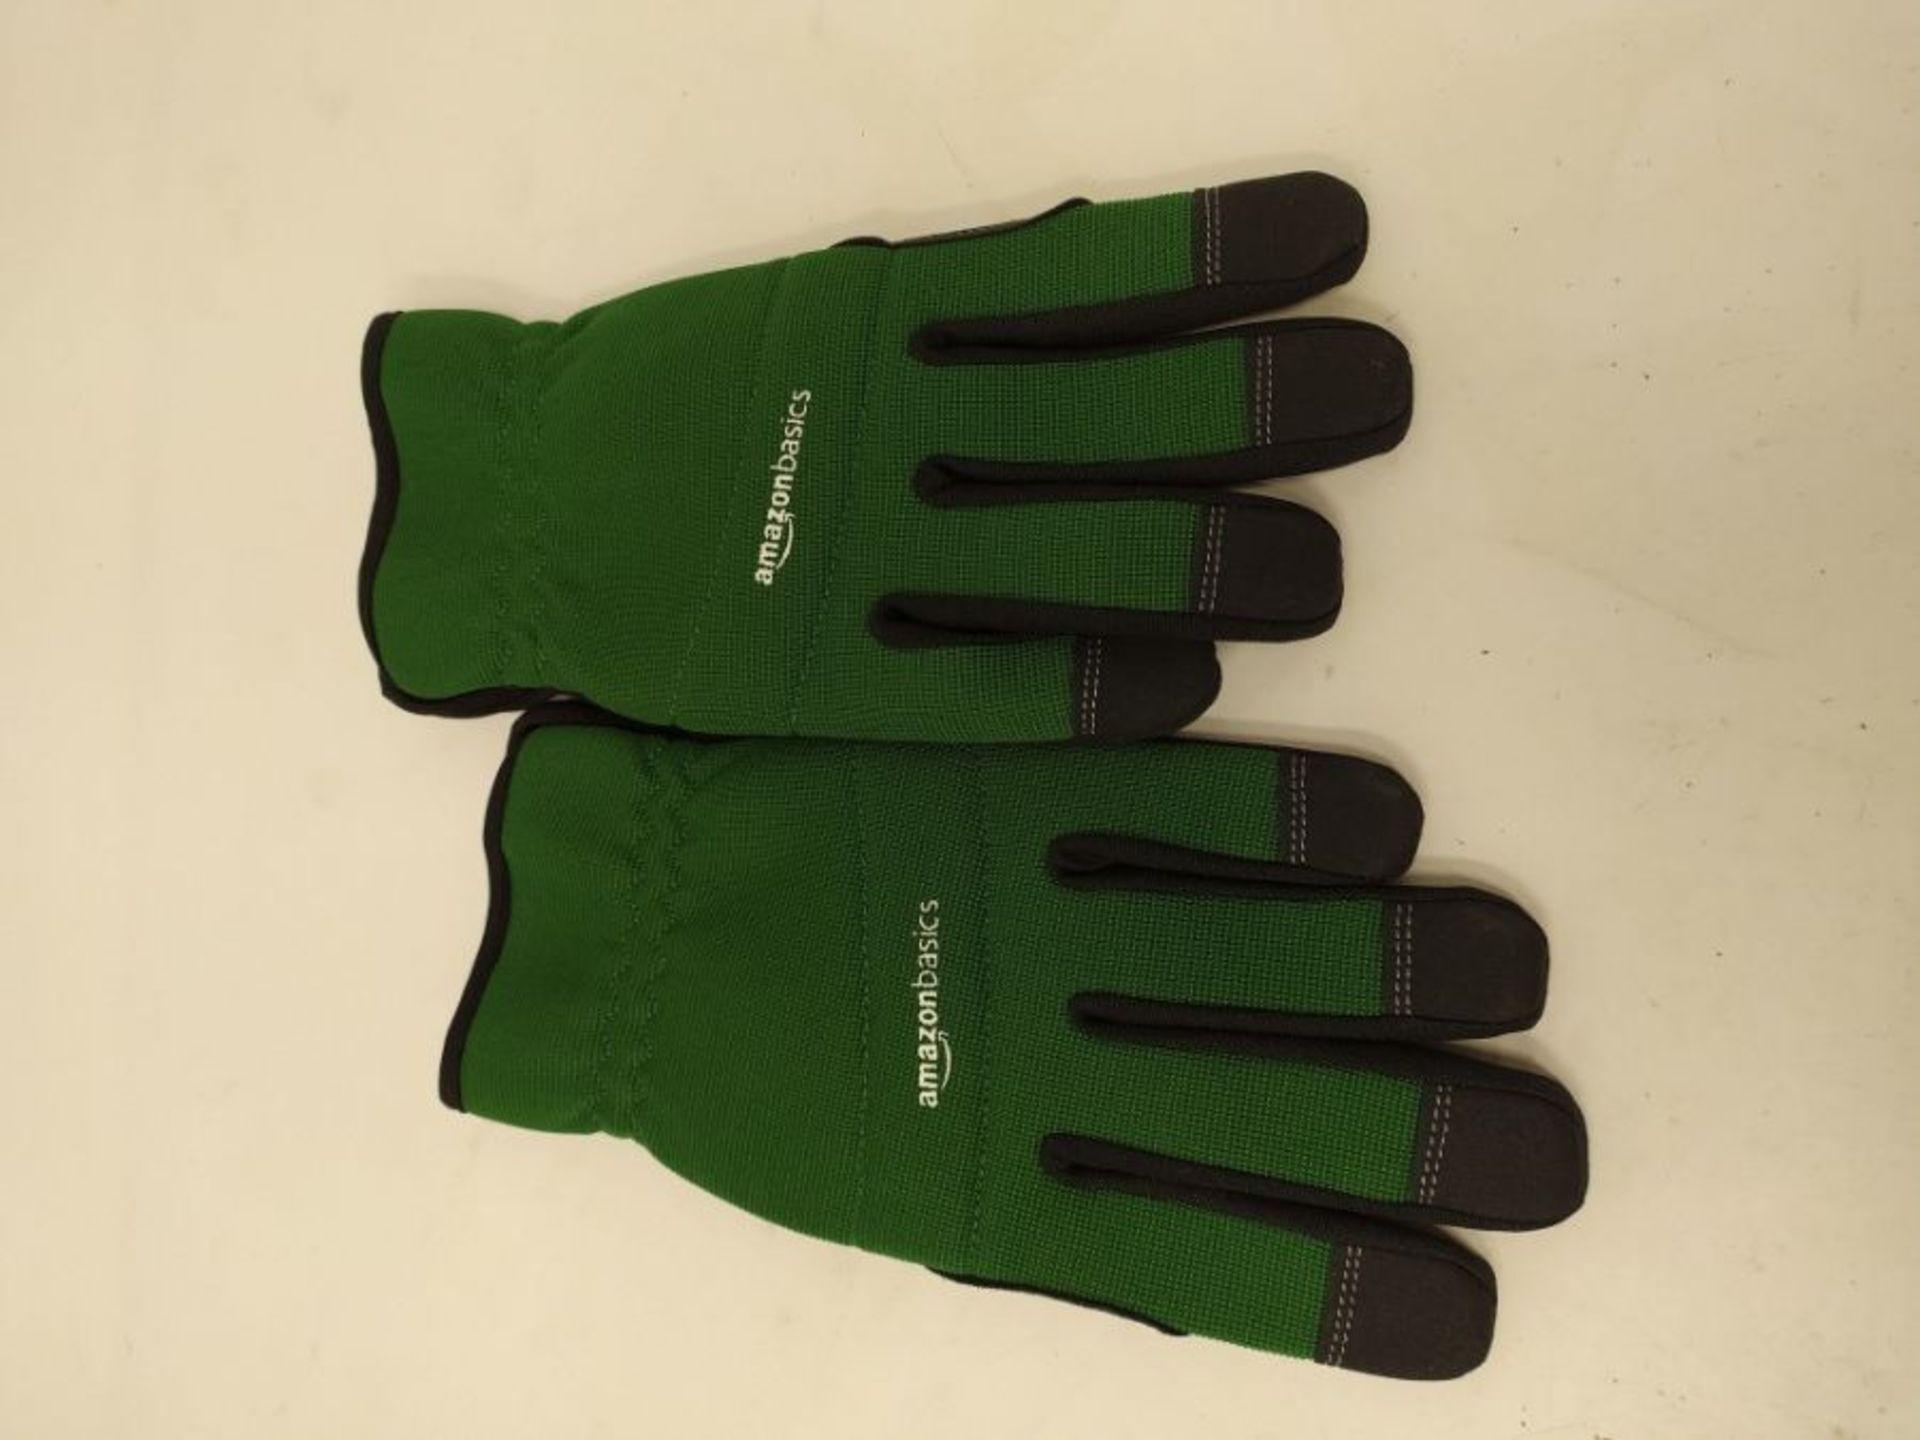 Amazon Basics Women's Work or Garden Gloves, Green, L - Image 2 of 2